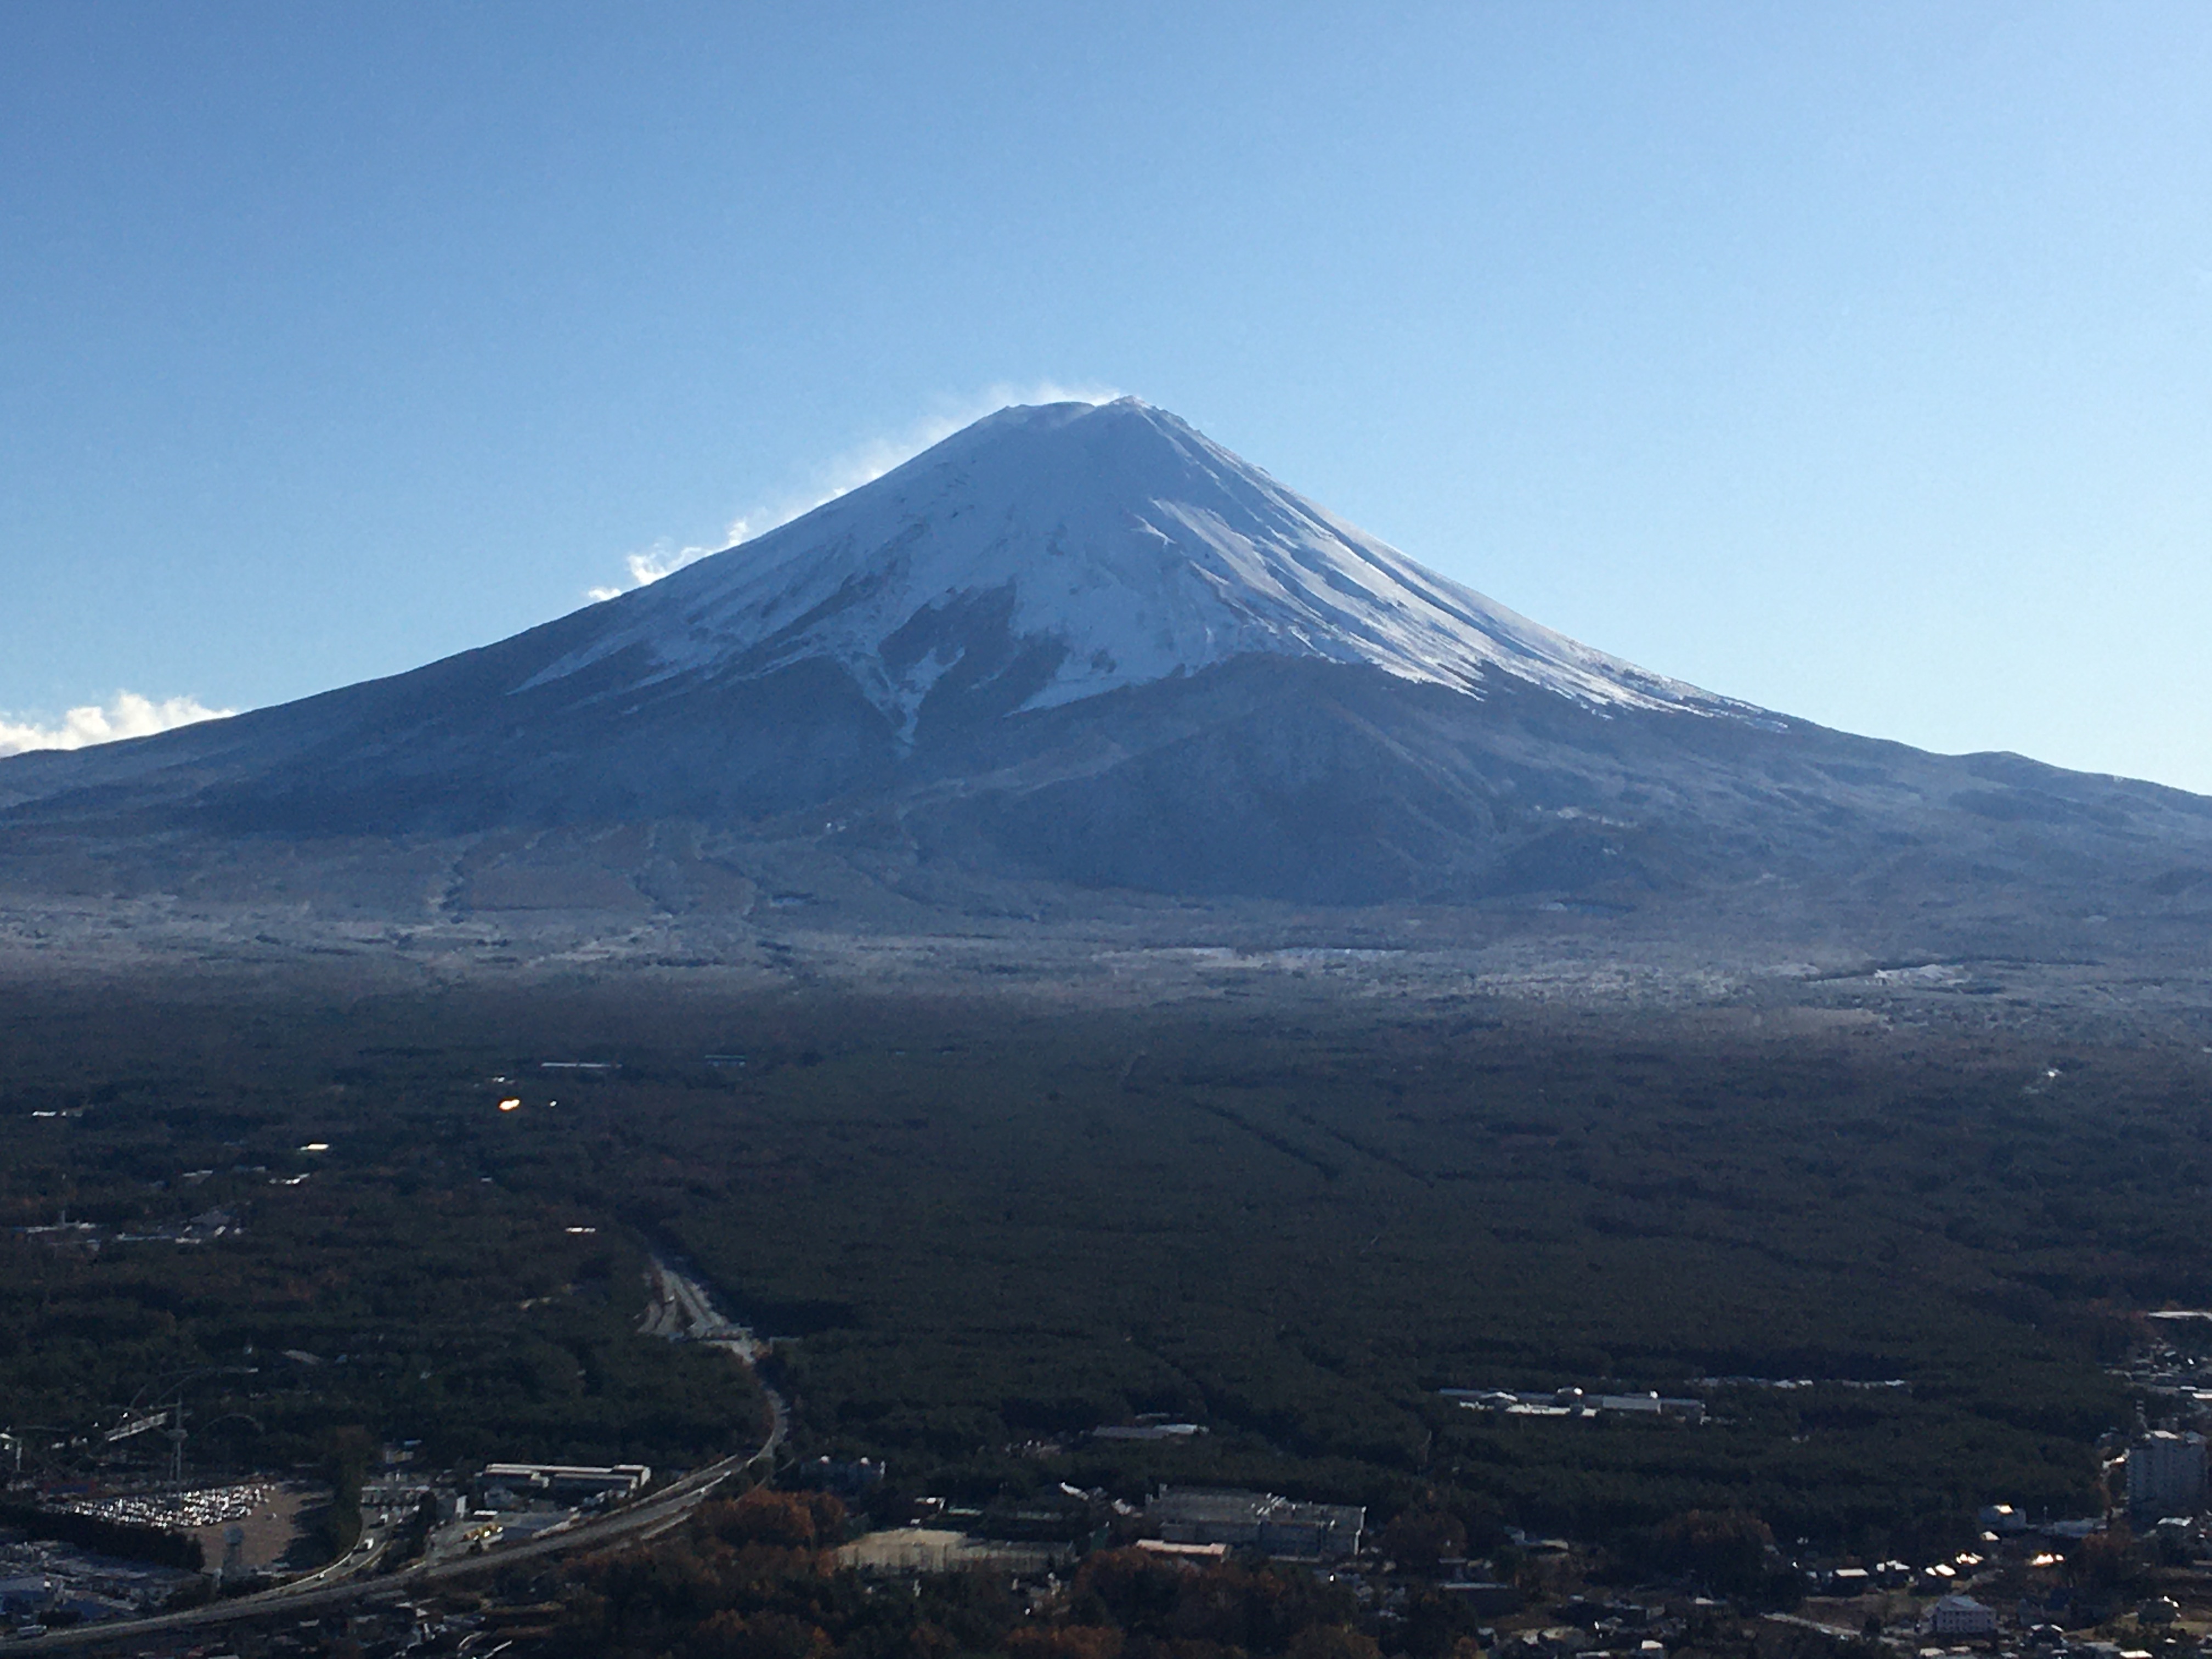 Mt.Fuji from the top station of Mt. Kachikachi ropeway